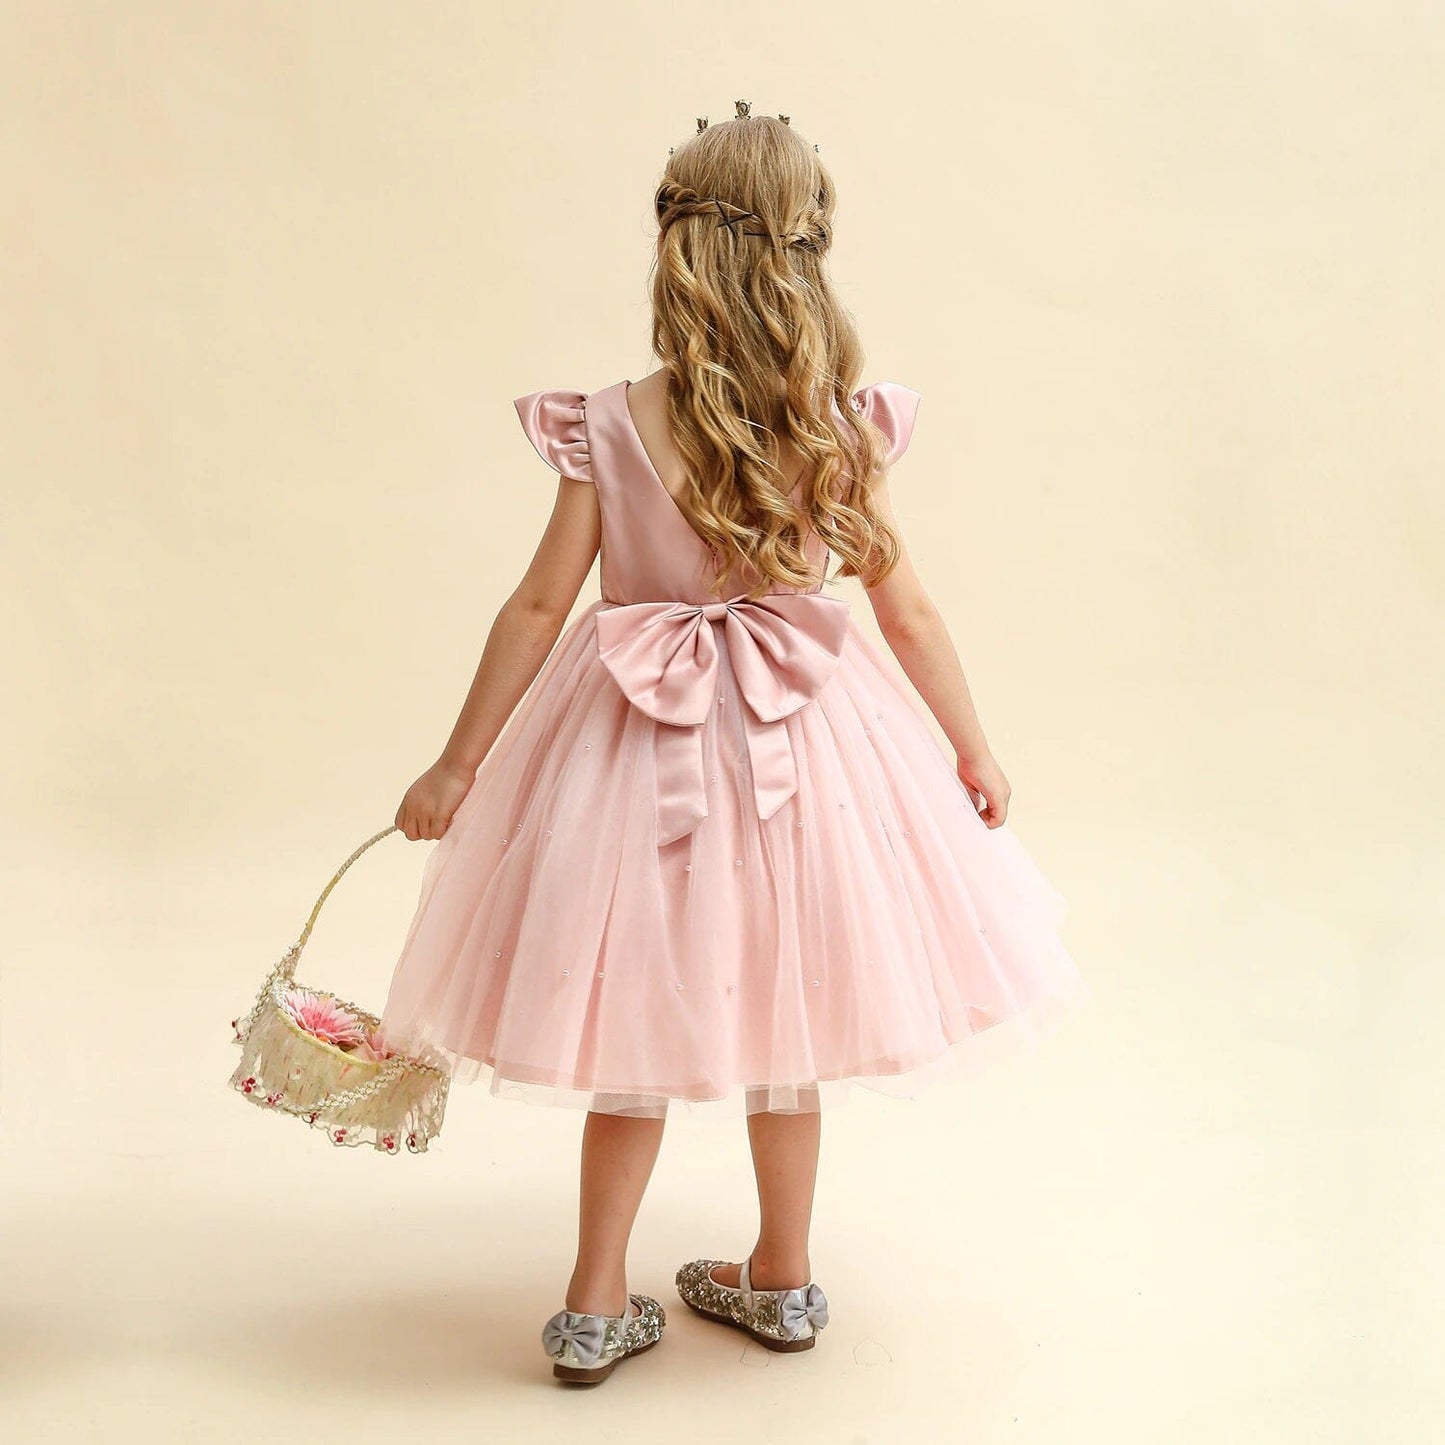 Girls Children Toddler Ruffle Sleeveless Big Bow Princess Tulle Sundress girls dress jehouze Pink01 6M 